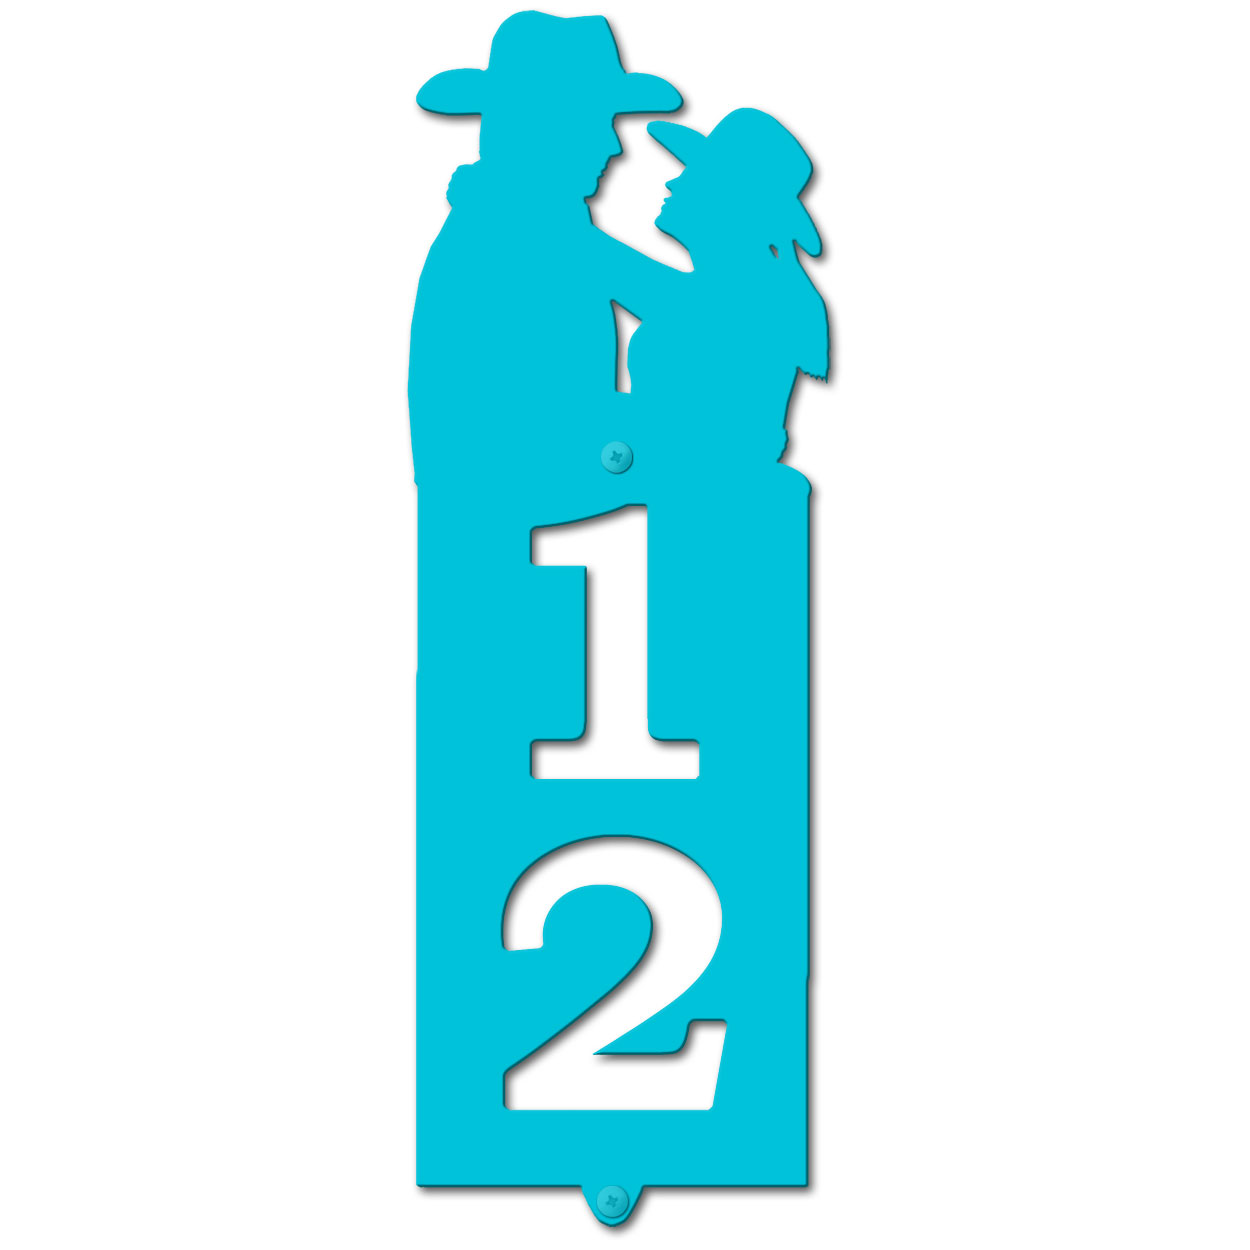 635082 - Cowboy Couple Cut Outs Two Digit Address Number Plaque